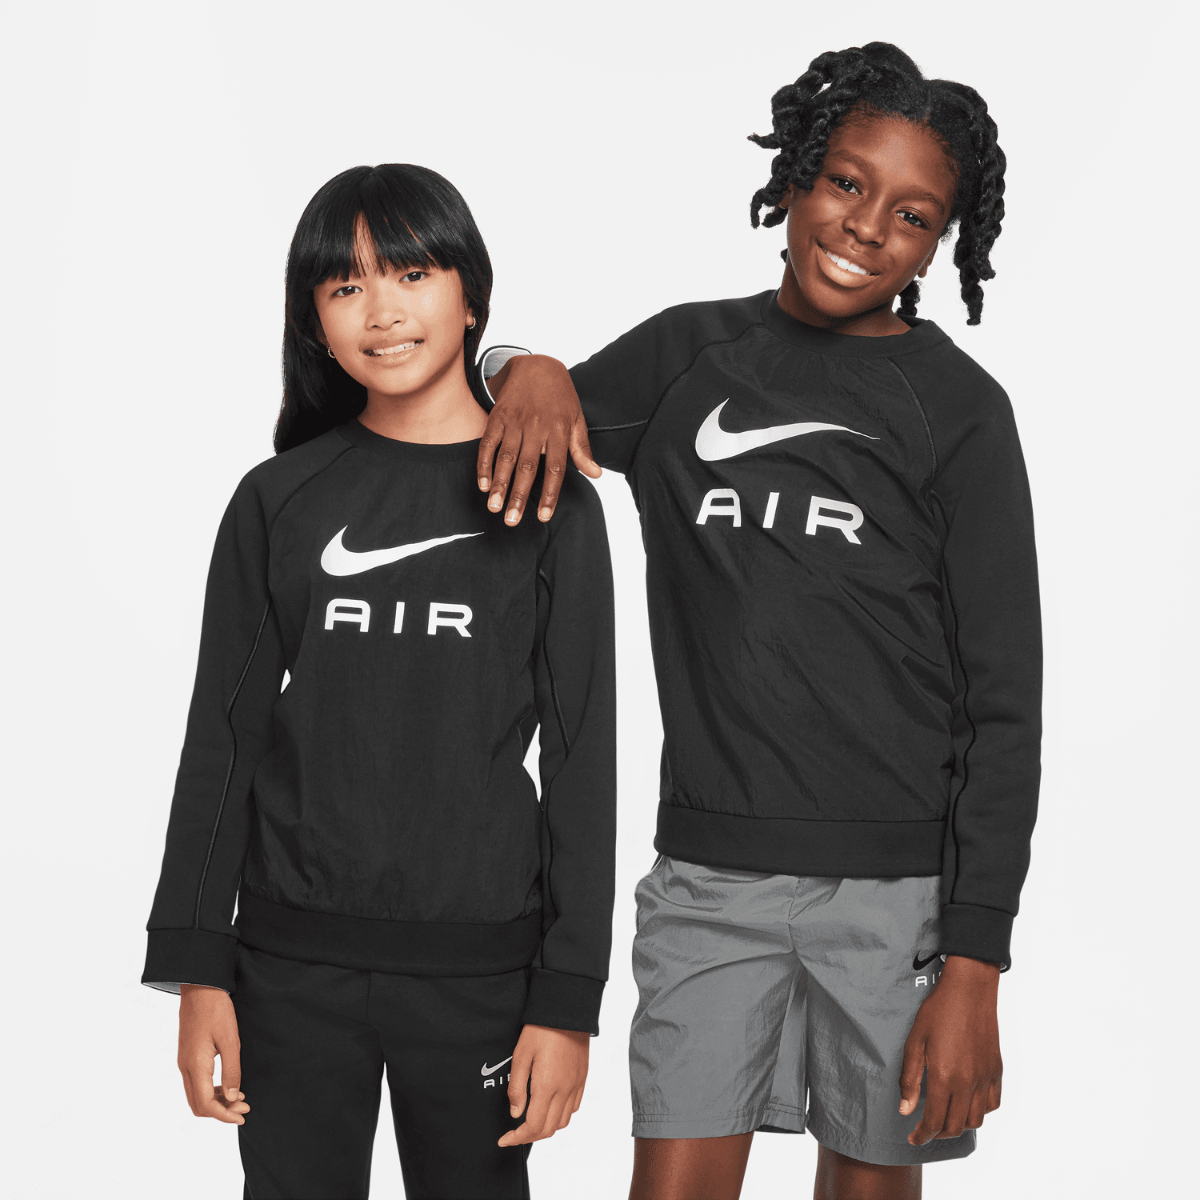 Nike Air Junior Sweatshirt - Black/White